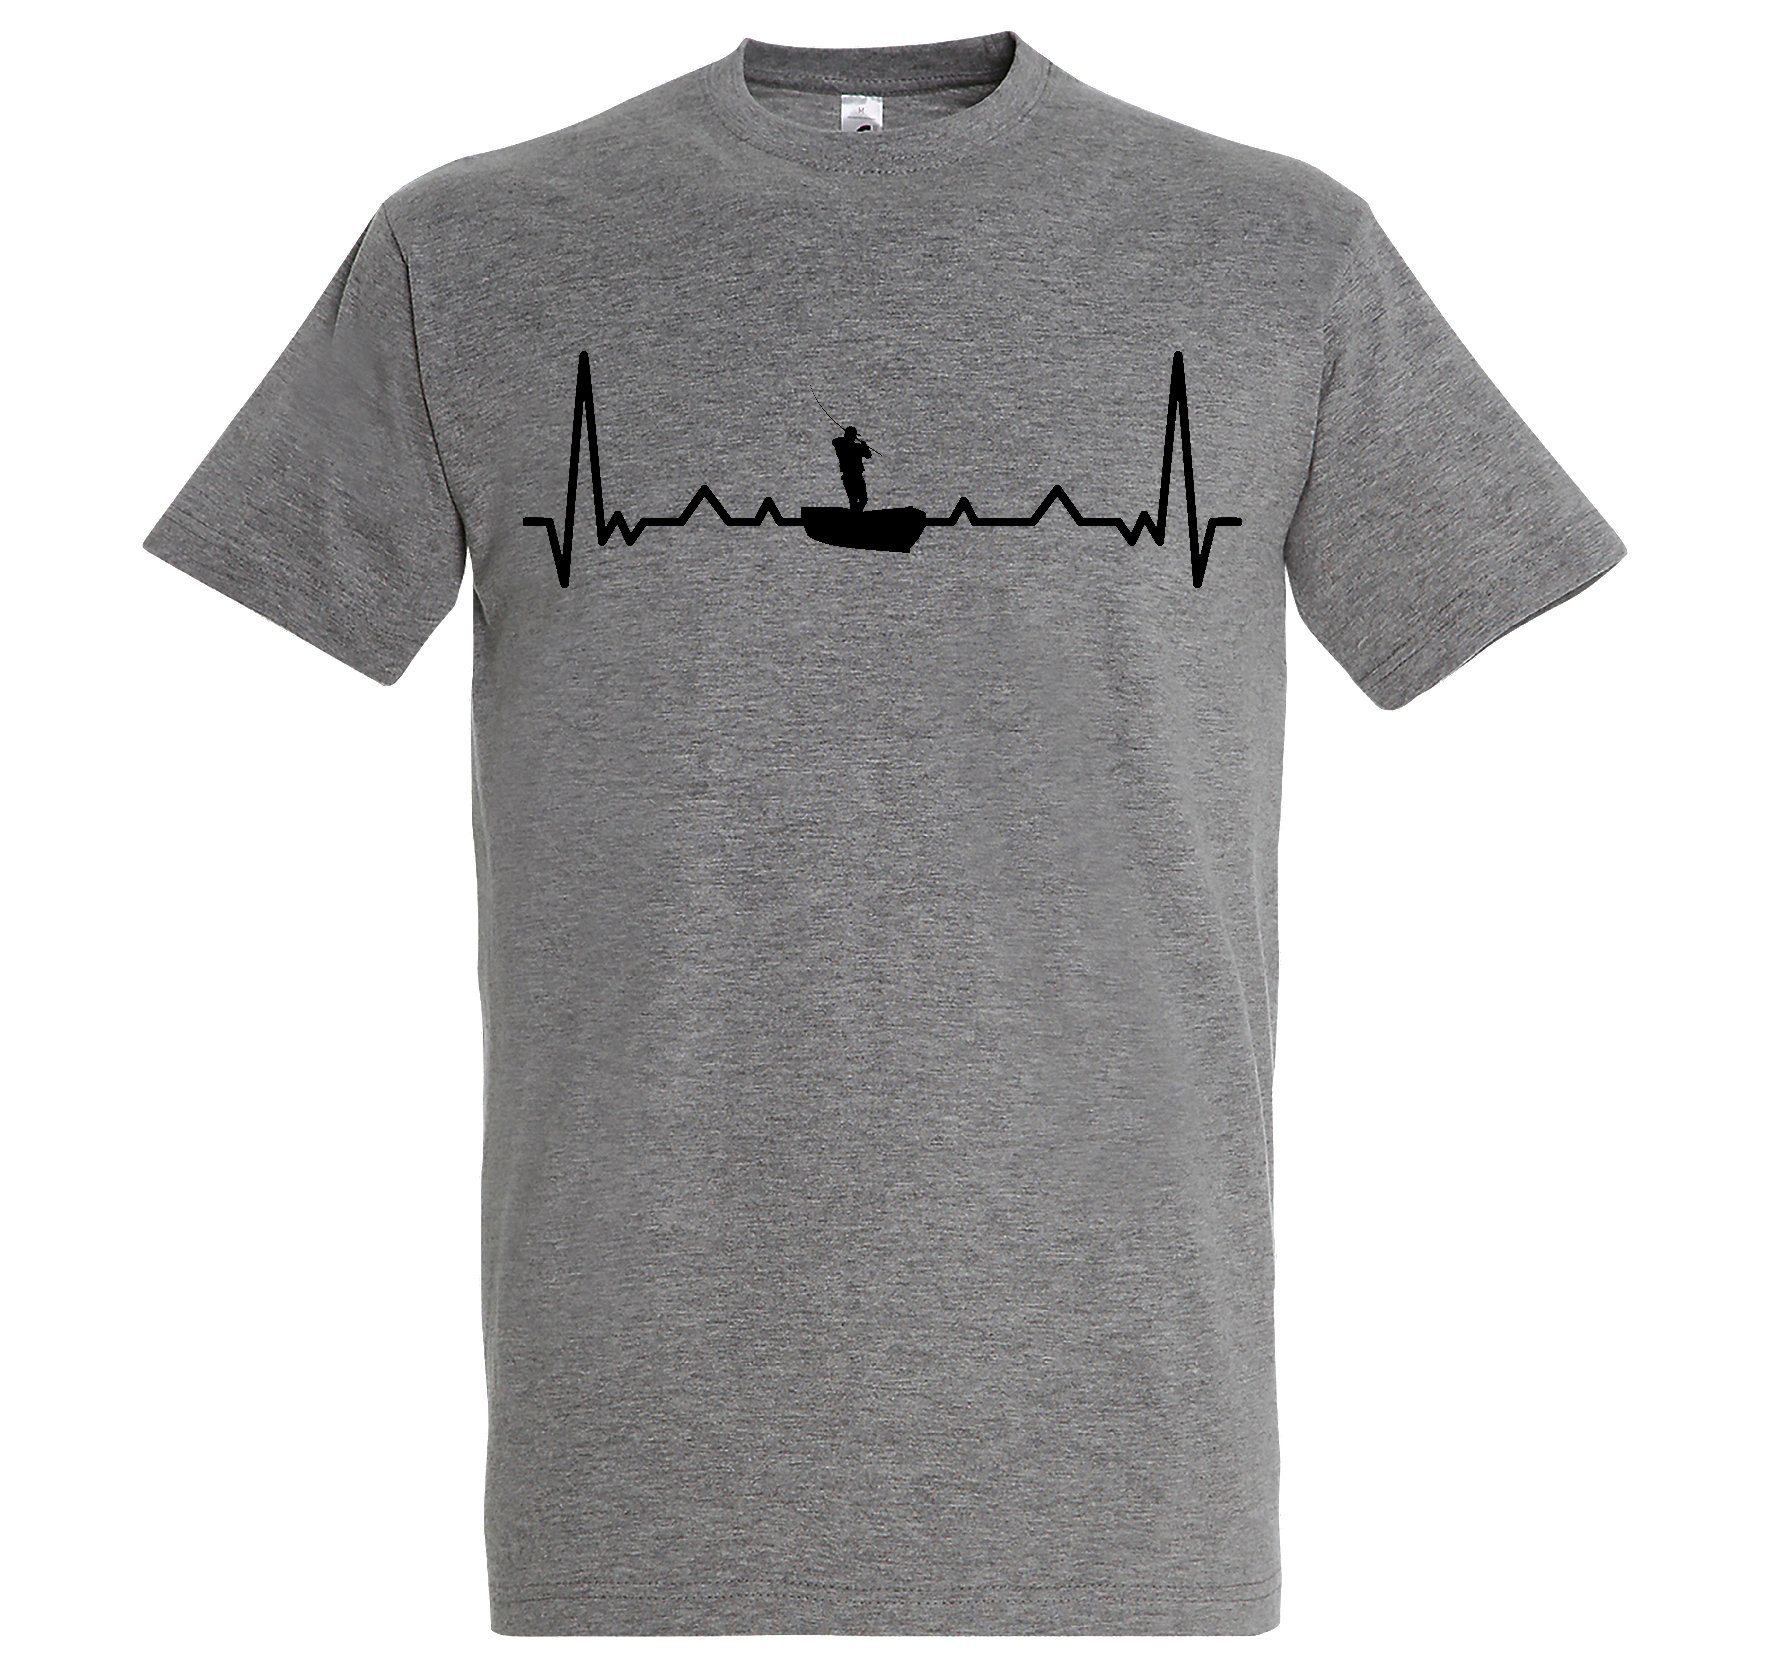 Tiefstpreisgarantie Youth Designz T-Shirt Heartbeat Angeln Grau Herren mit lustigem Angler Frontprint Shirt